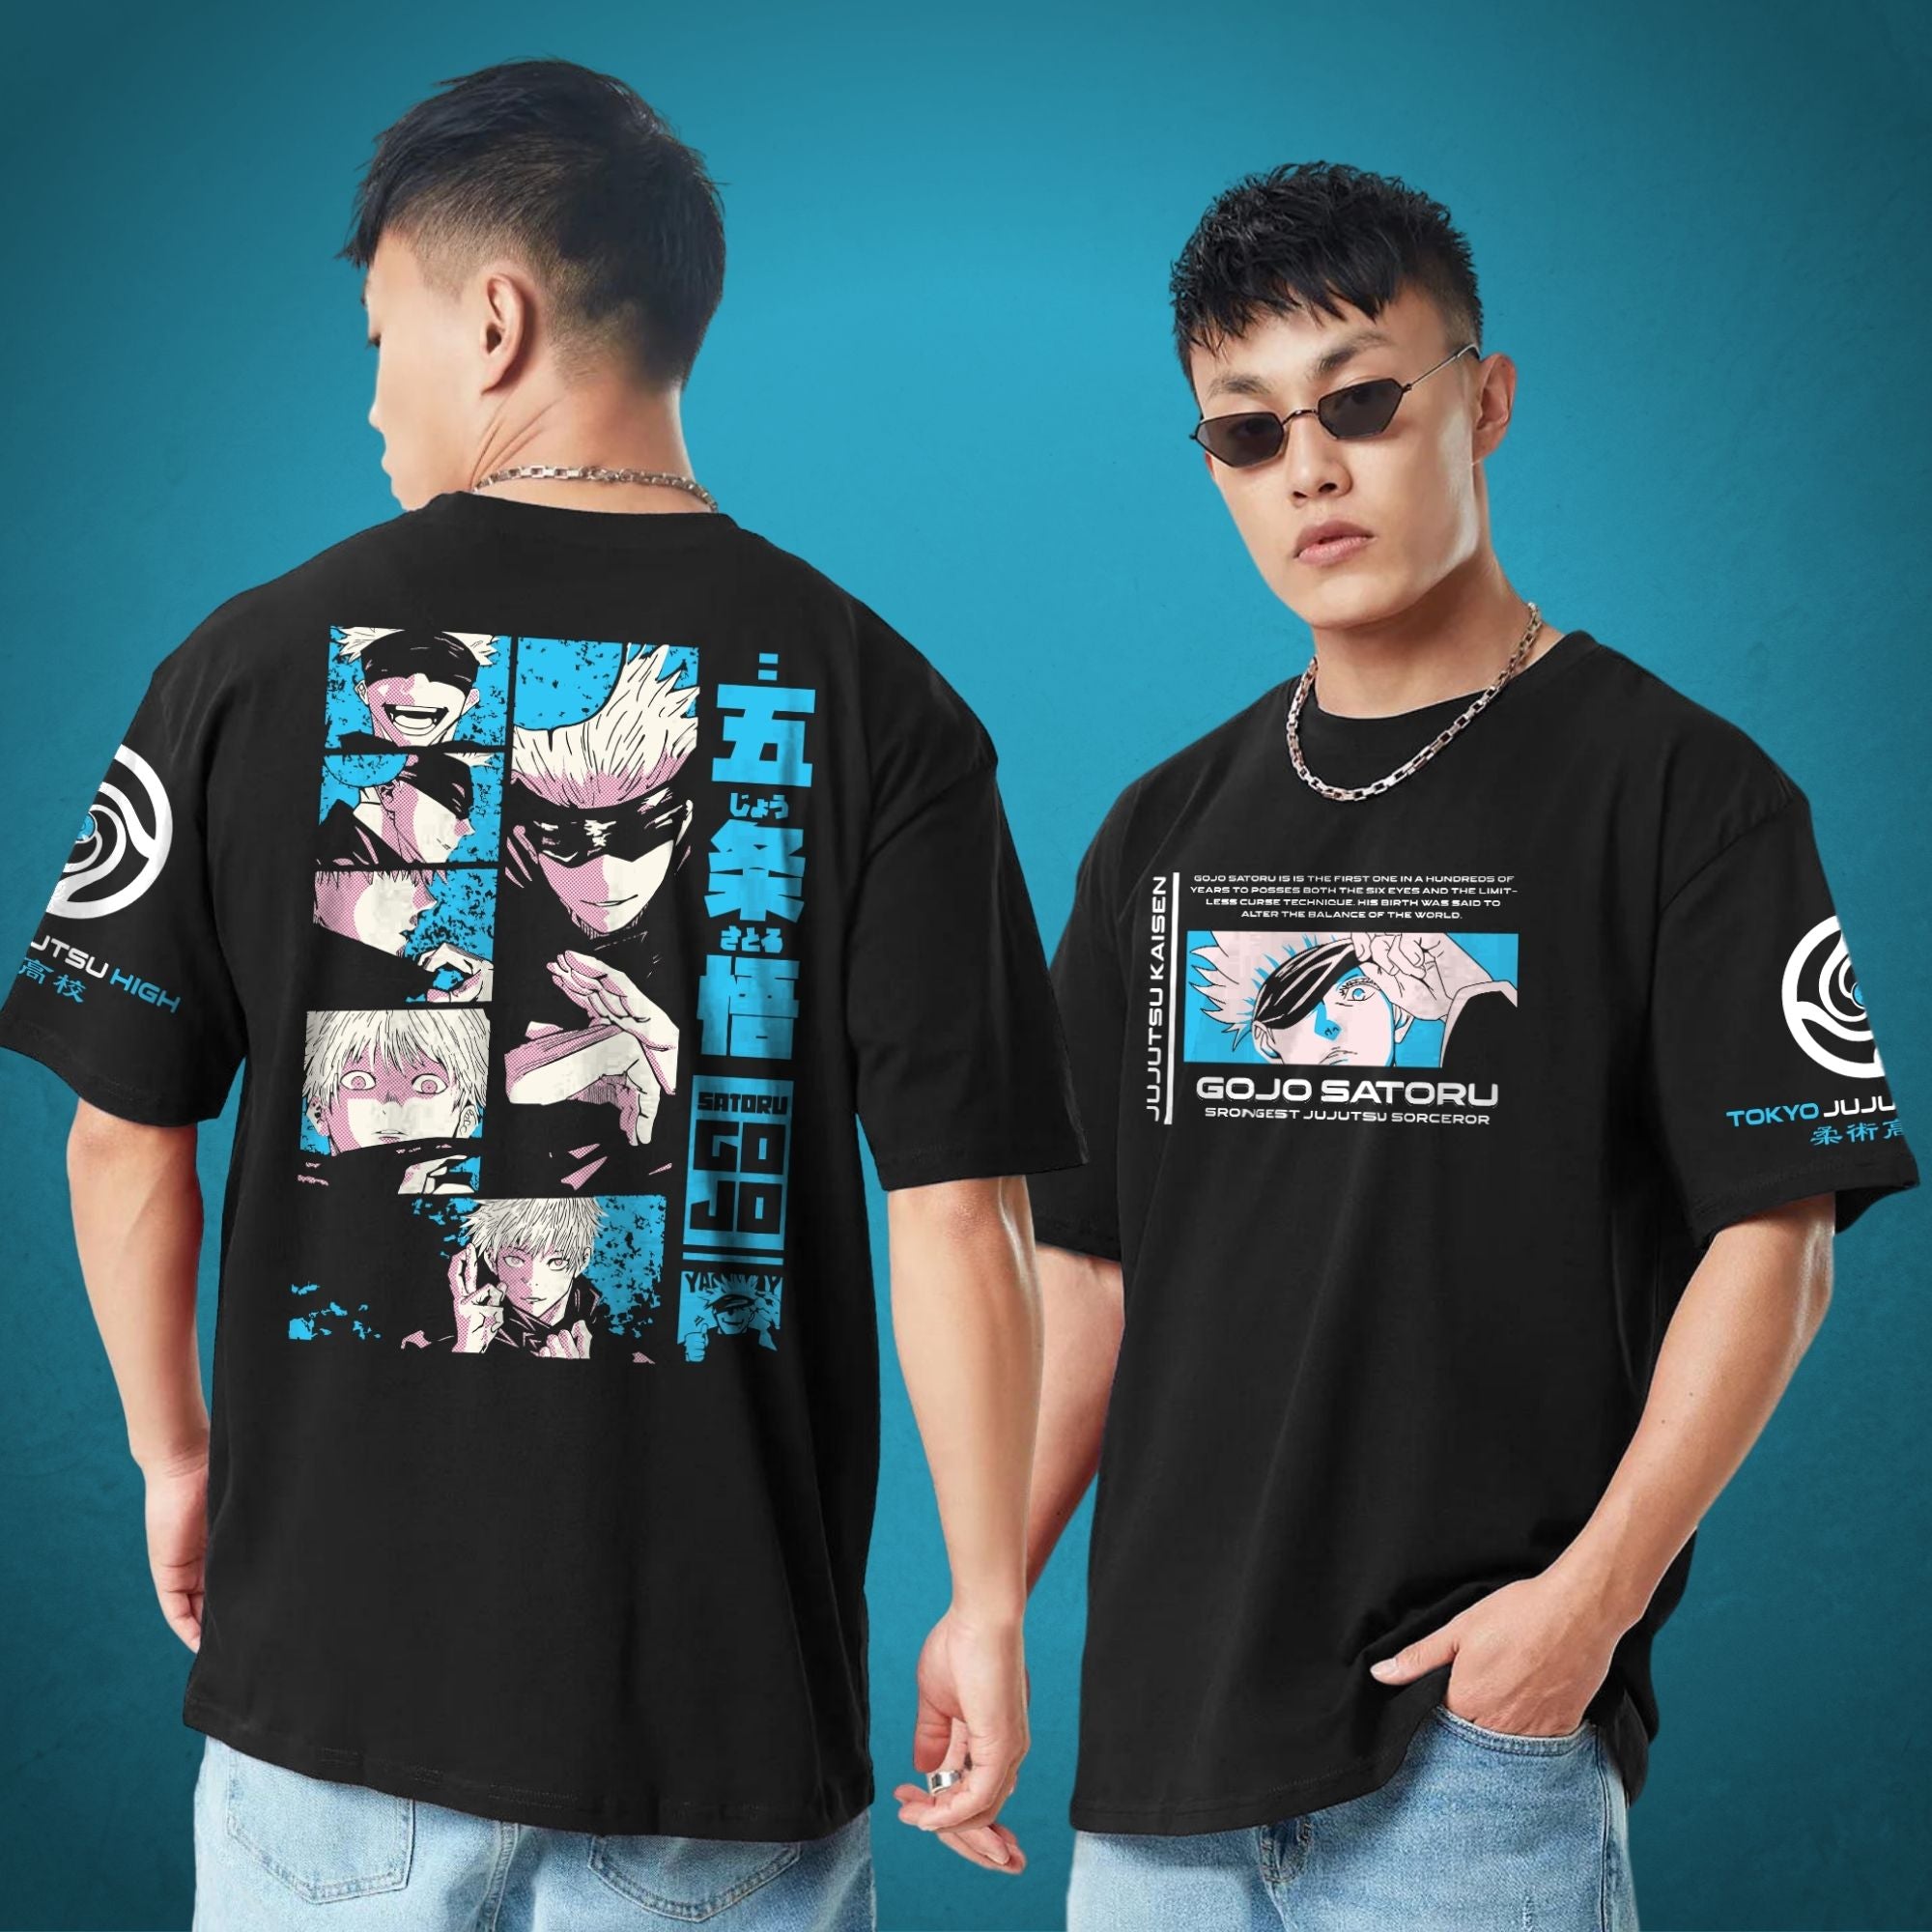 Thalasi Black Anime Oversized Tshirt for Men  Boys  Cool Anime back  printed t shirt